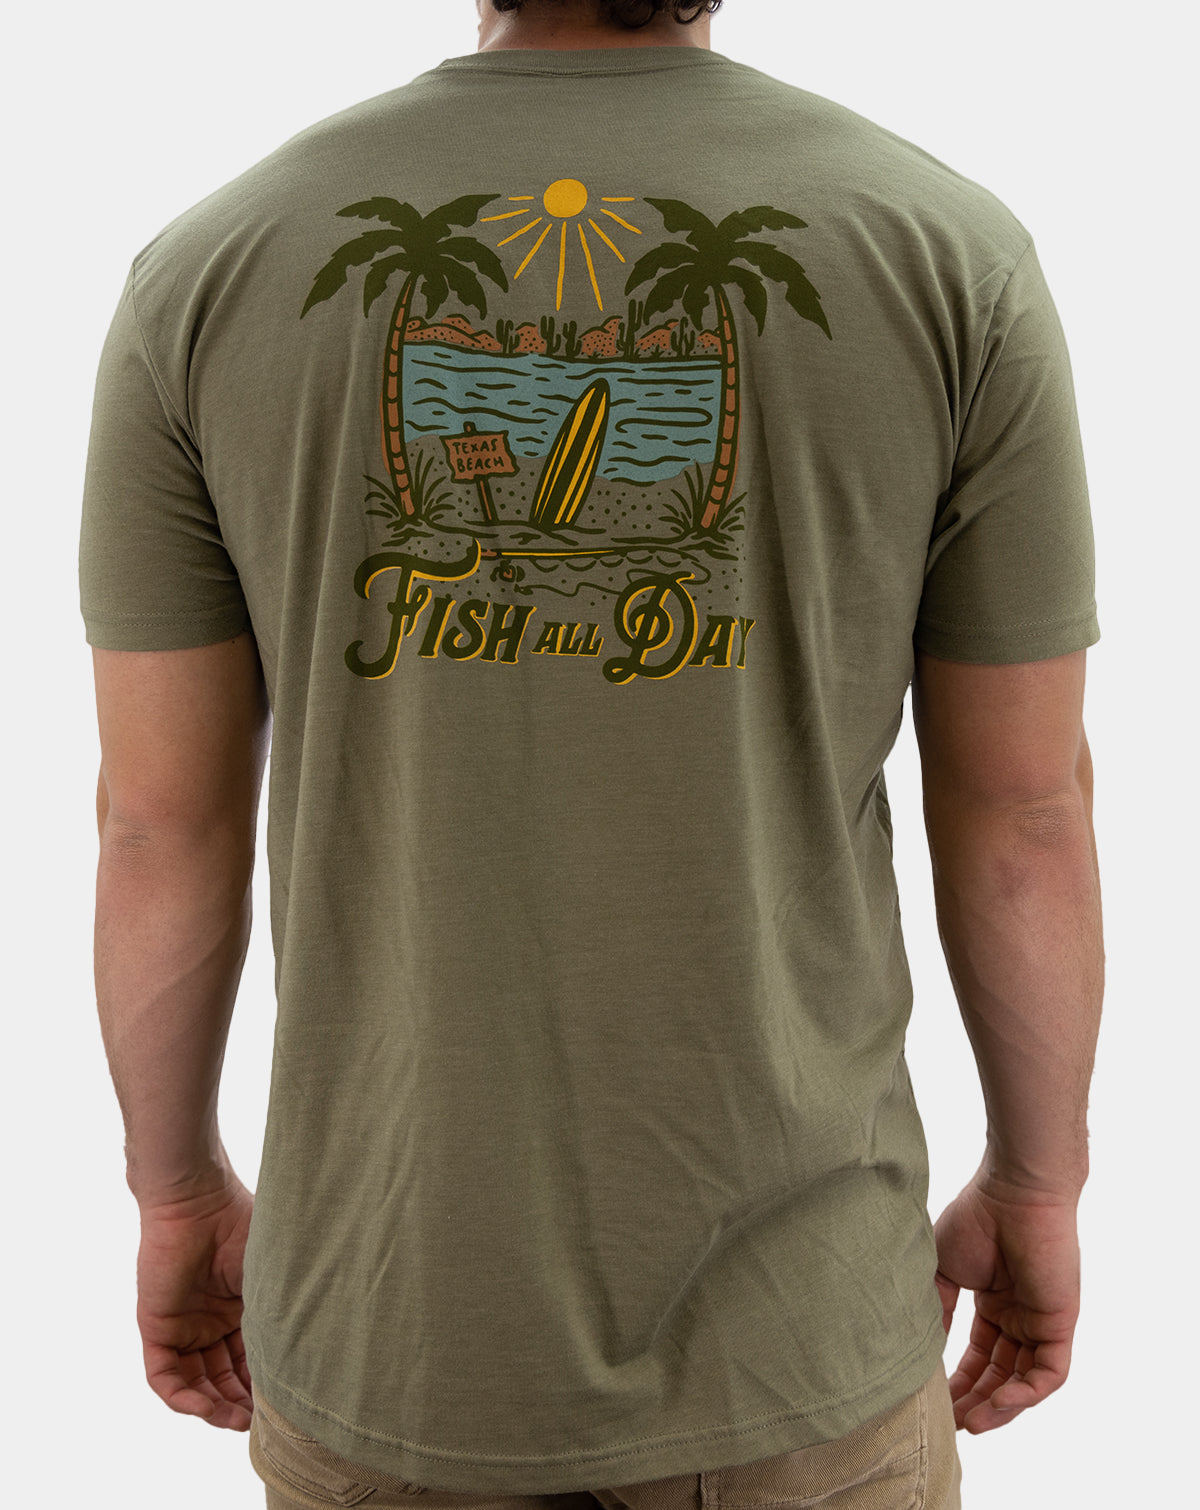  Mens Reel Cool Uncle Fishing Funny Gift for men T-Shirt :  ביגוד, נעליים ותכשיטים